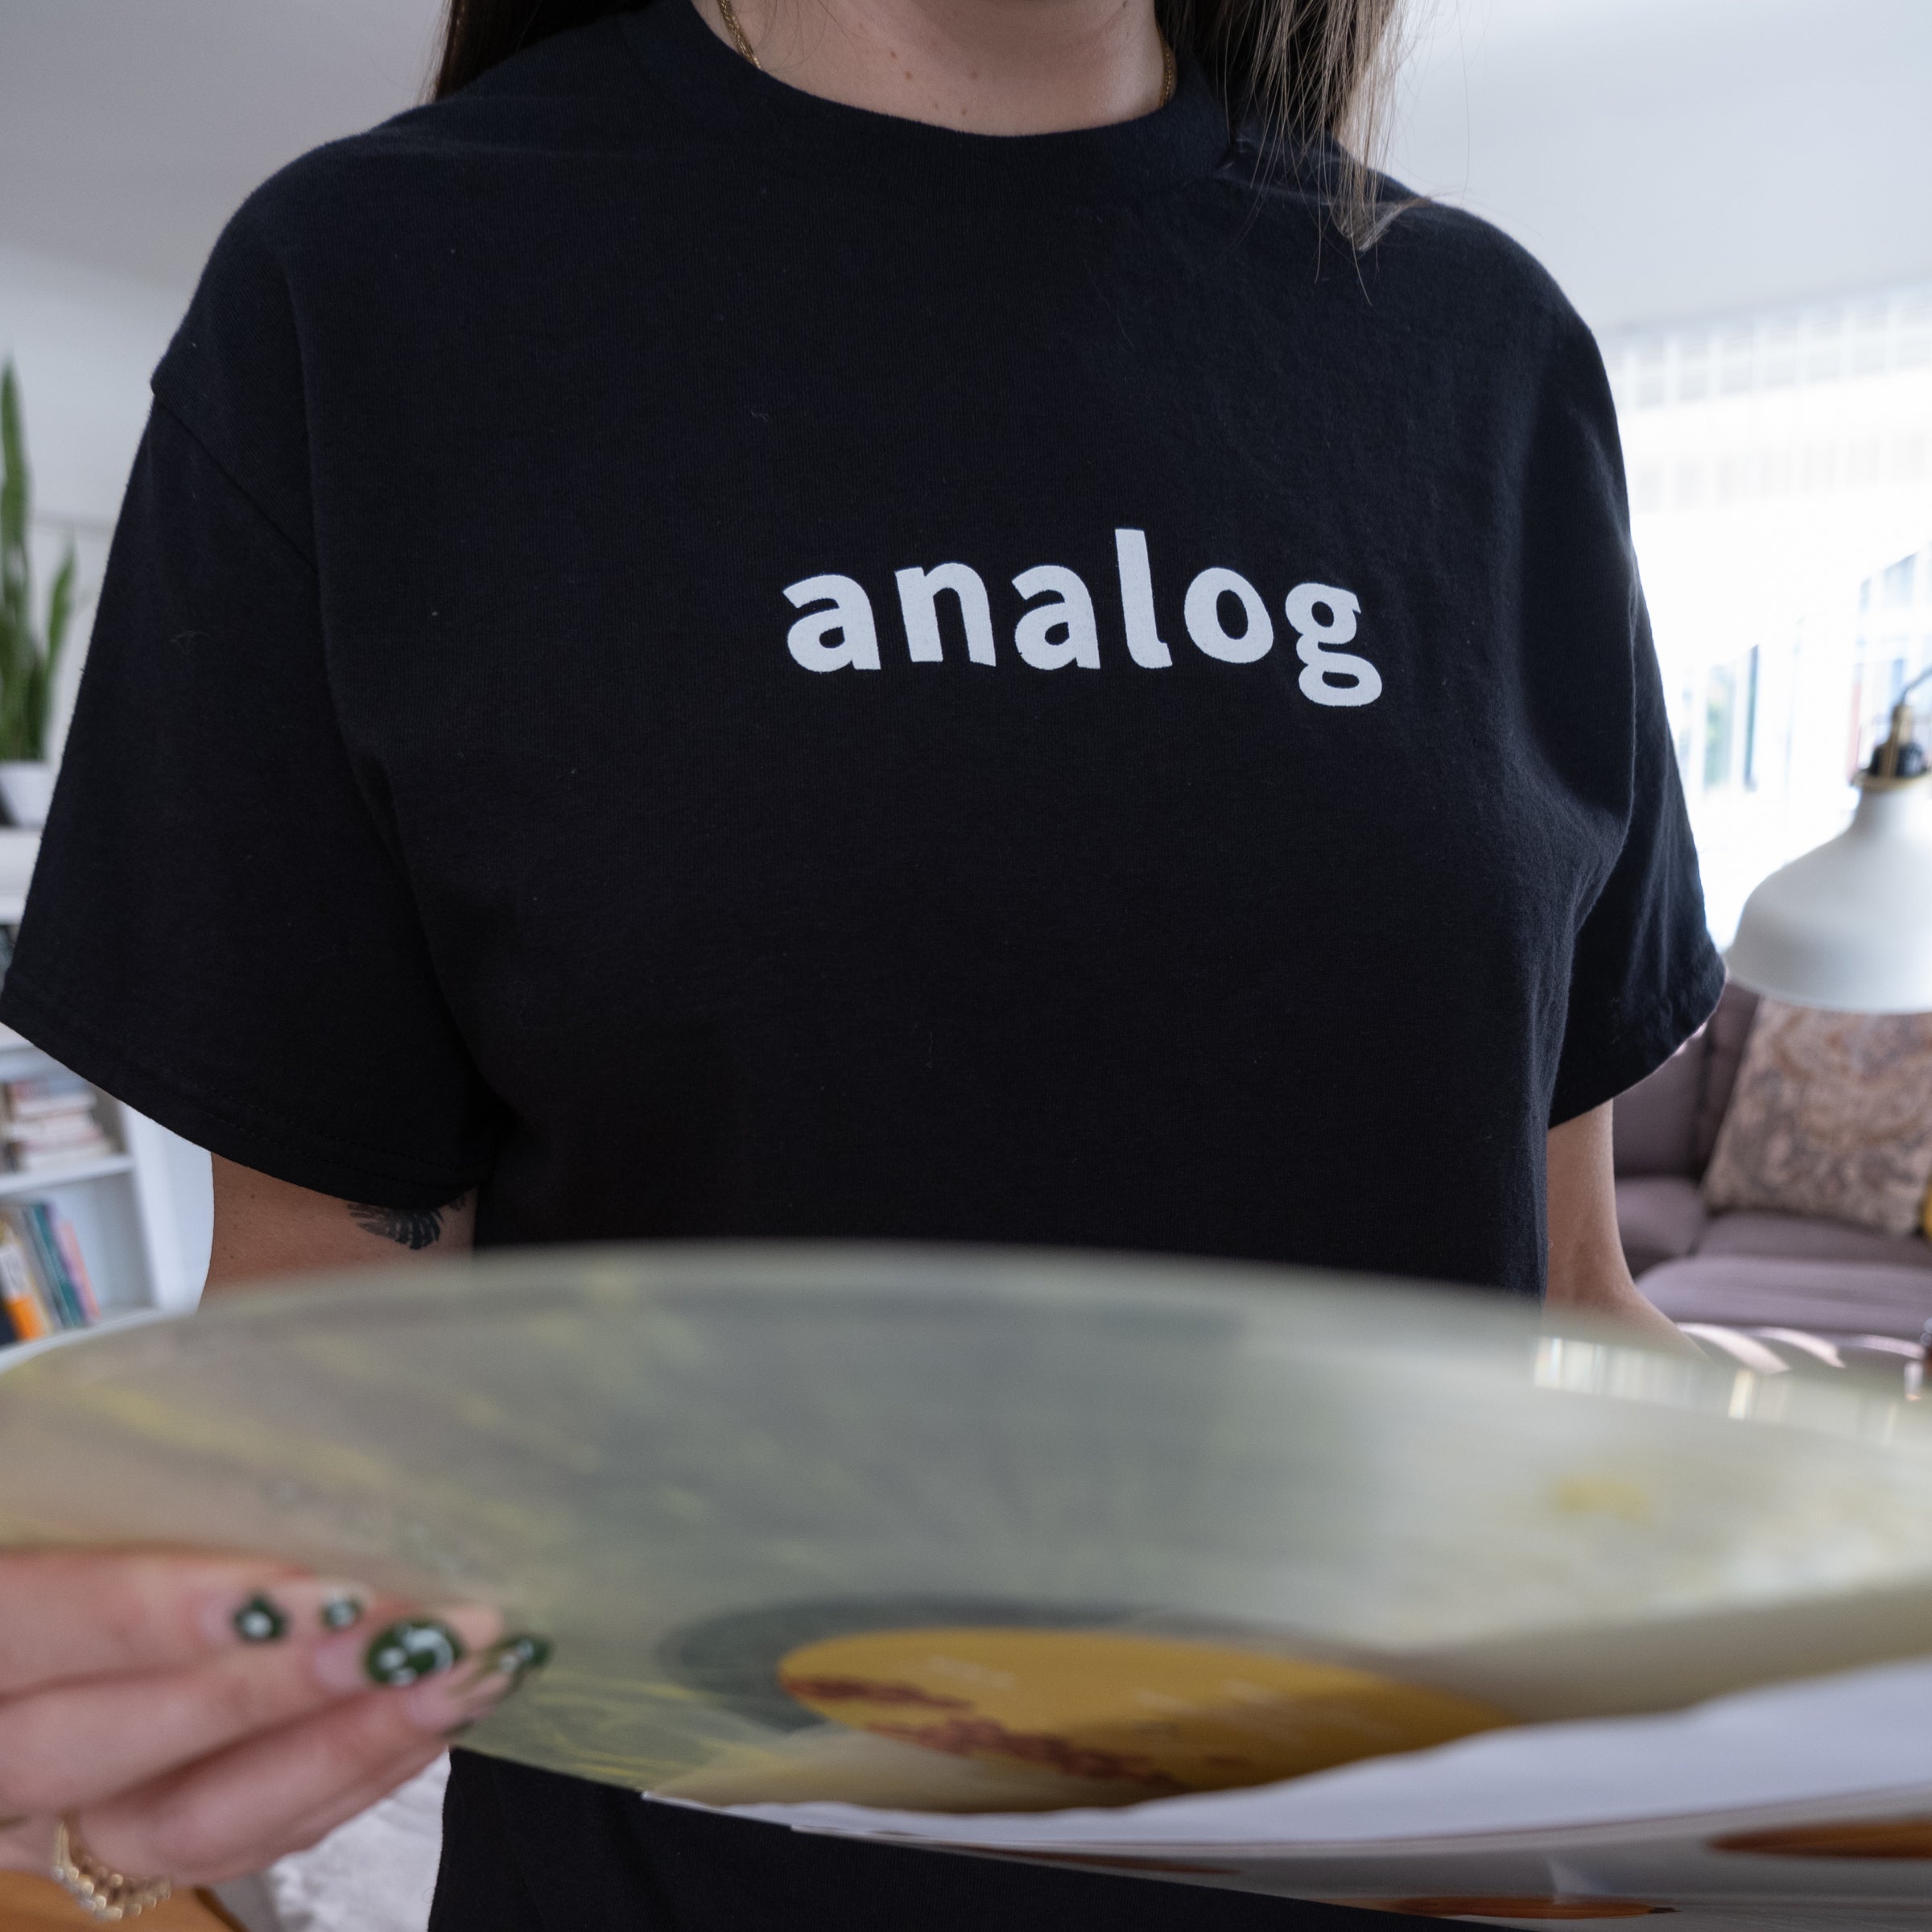 Analog T-Shirt